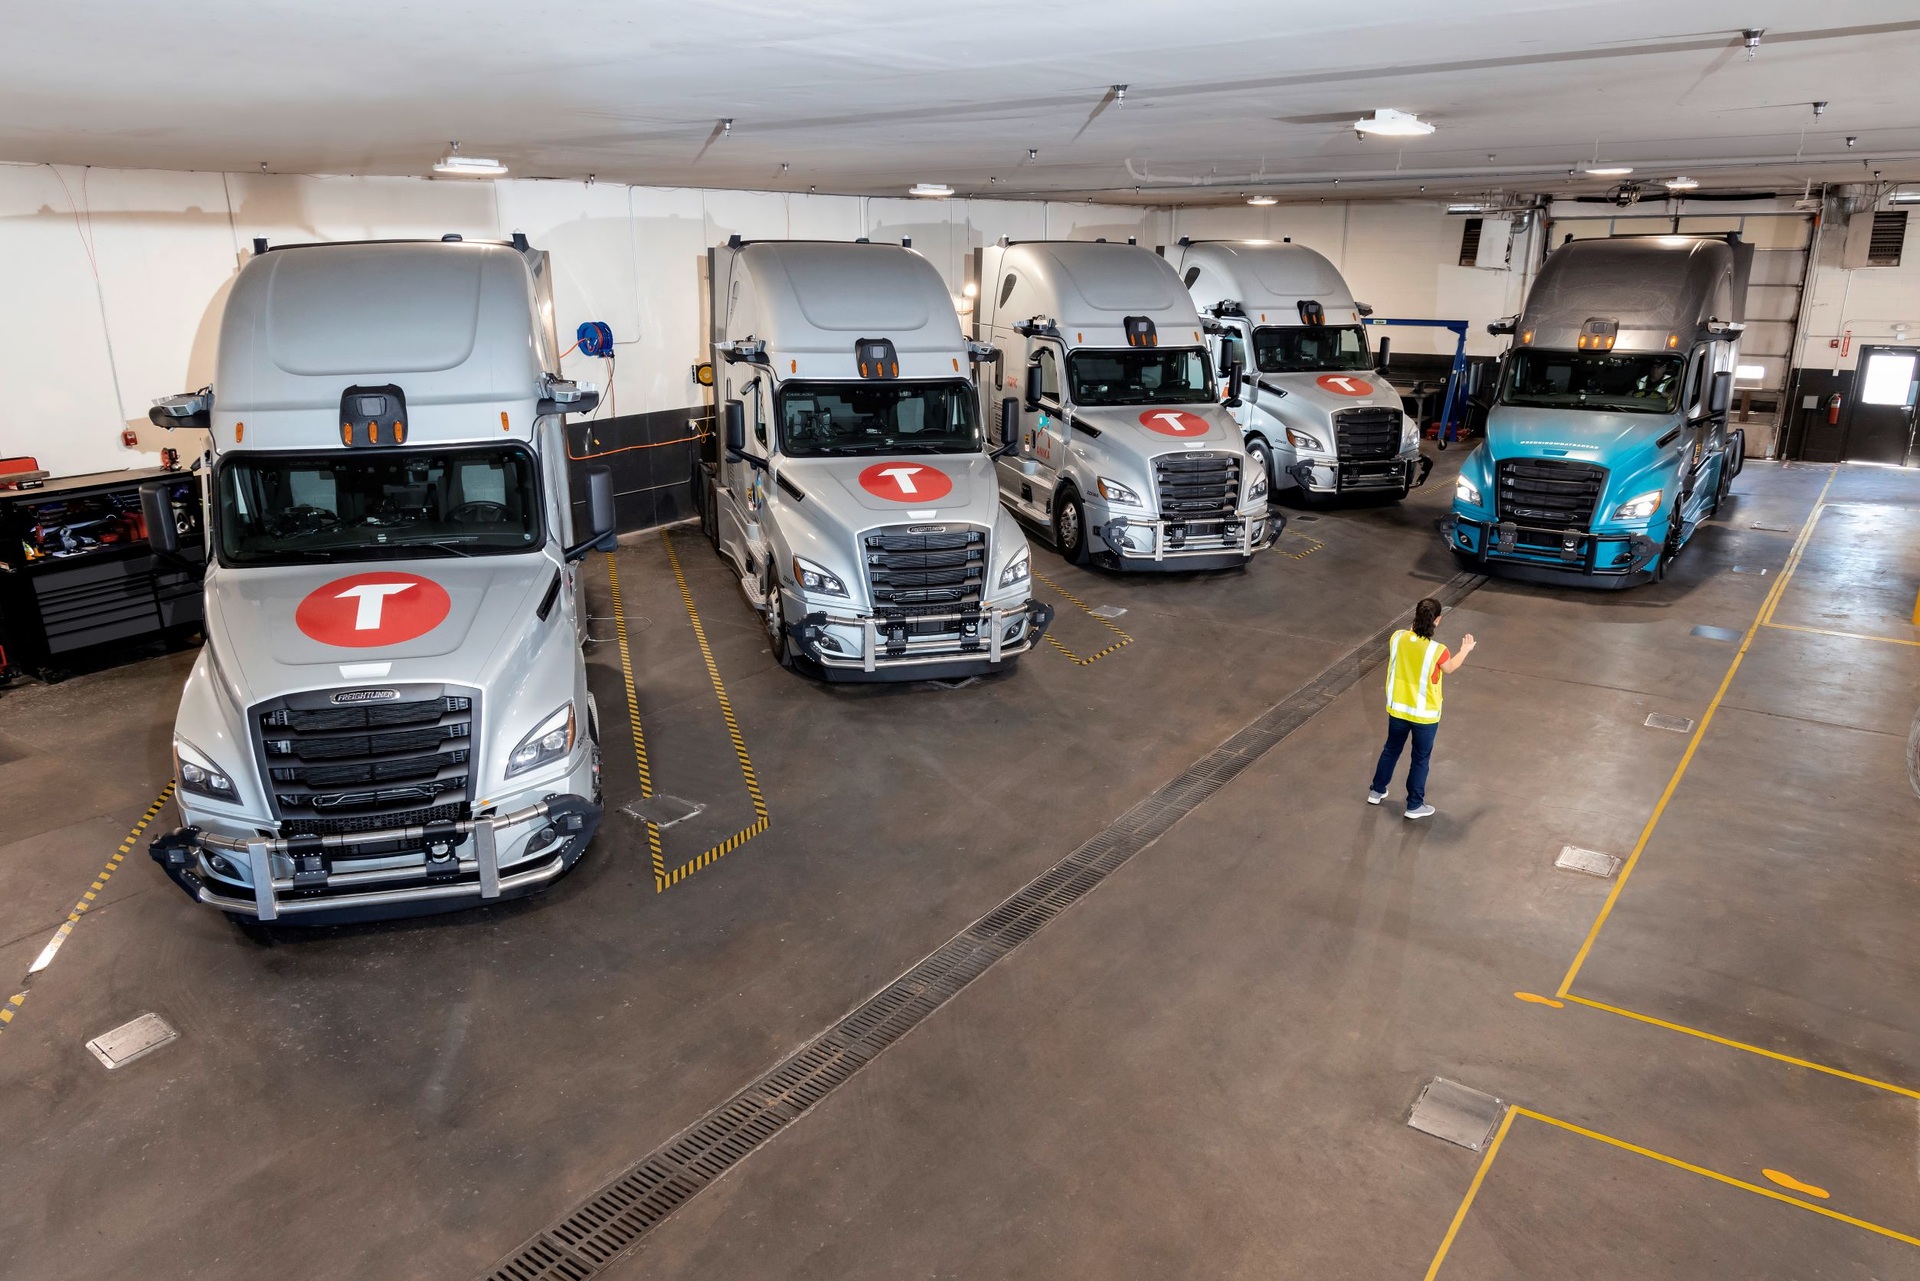 Daimler Truck’s independent subsidiary Torc Robotics collaborates with leading logistics companies on autonomous trucking